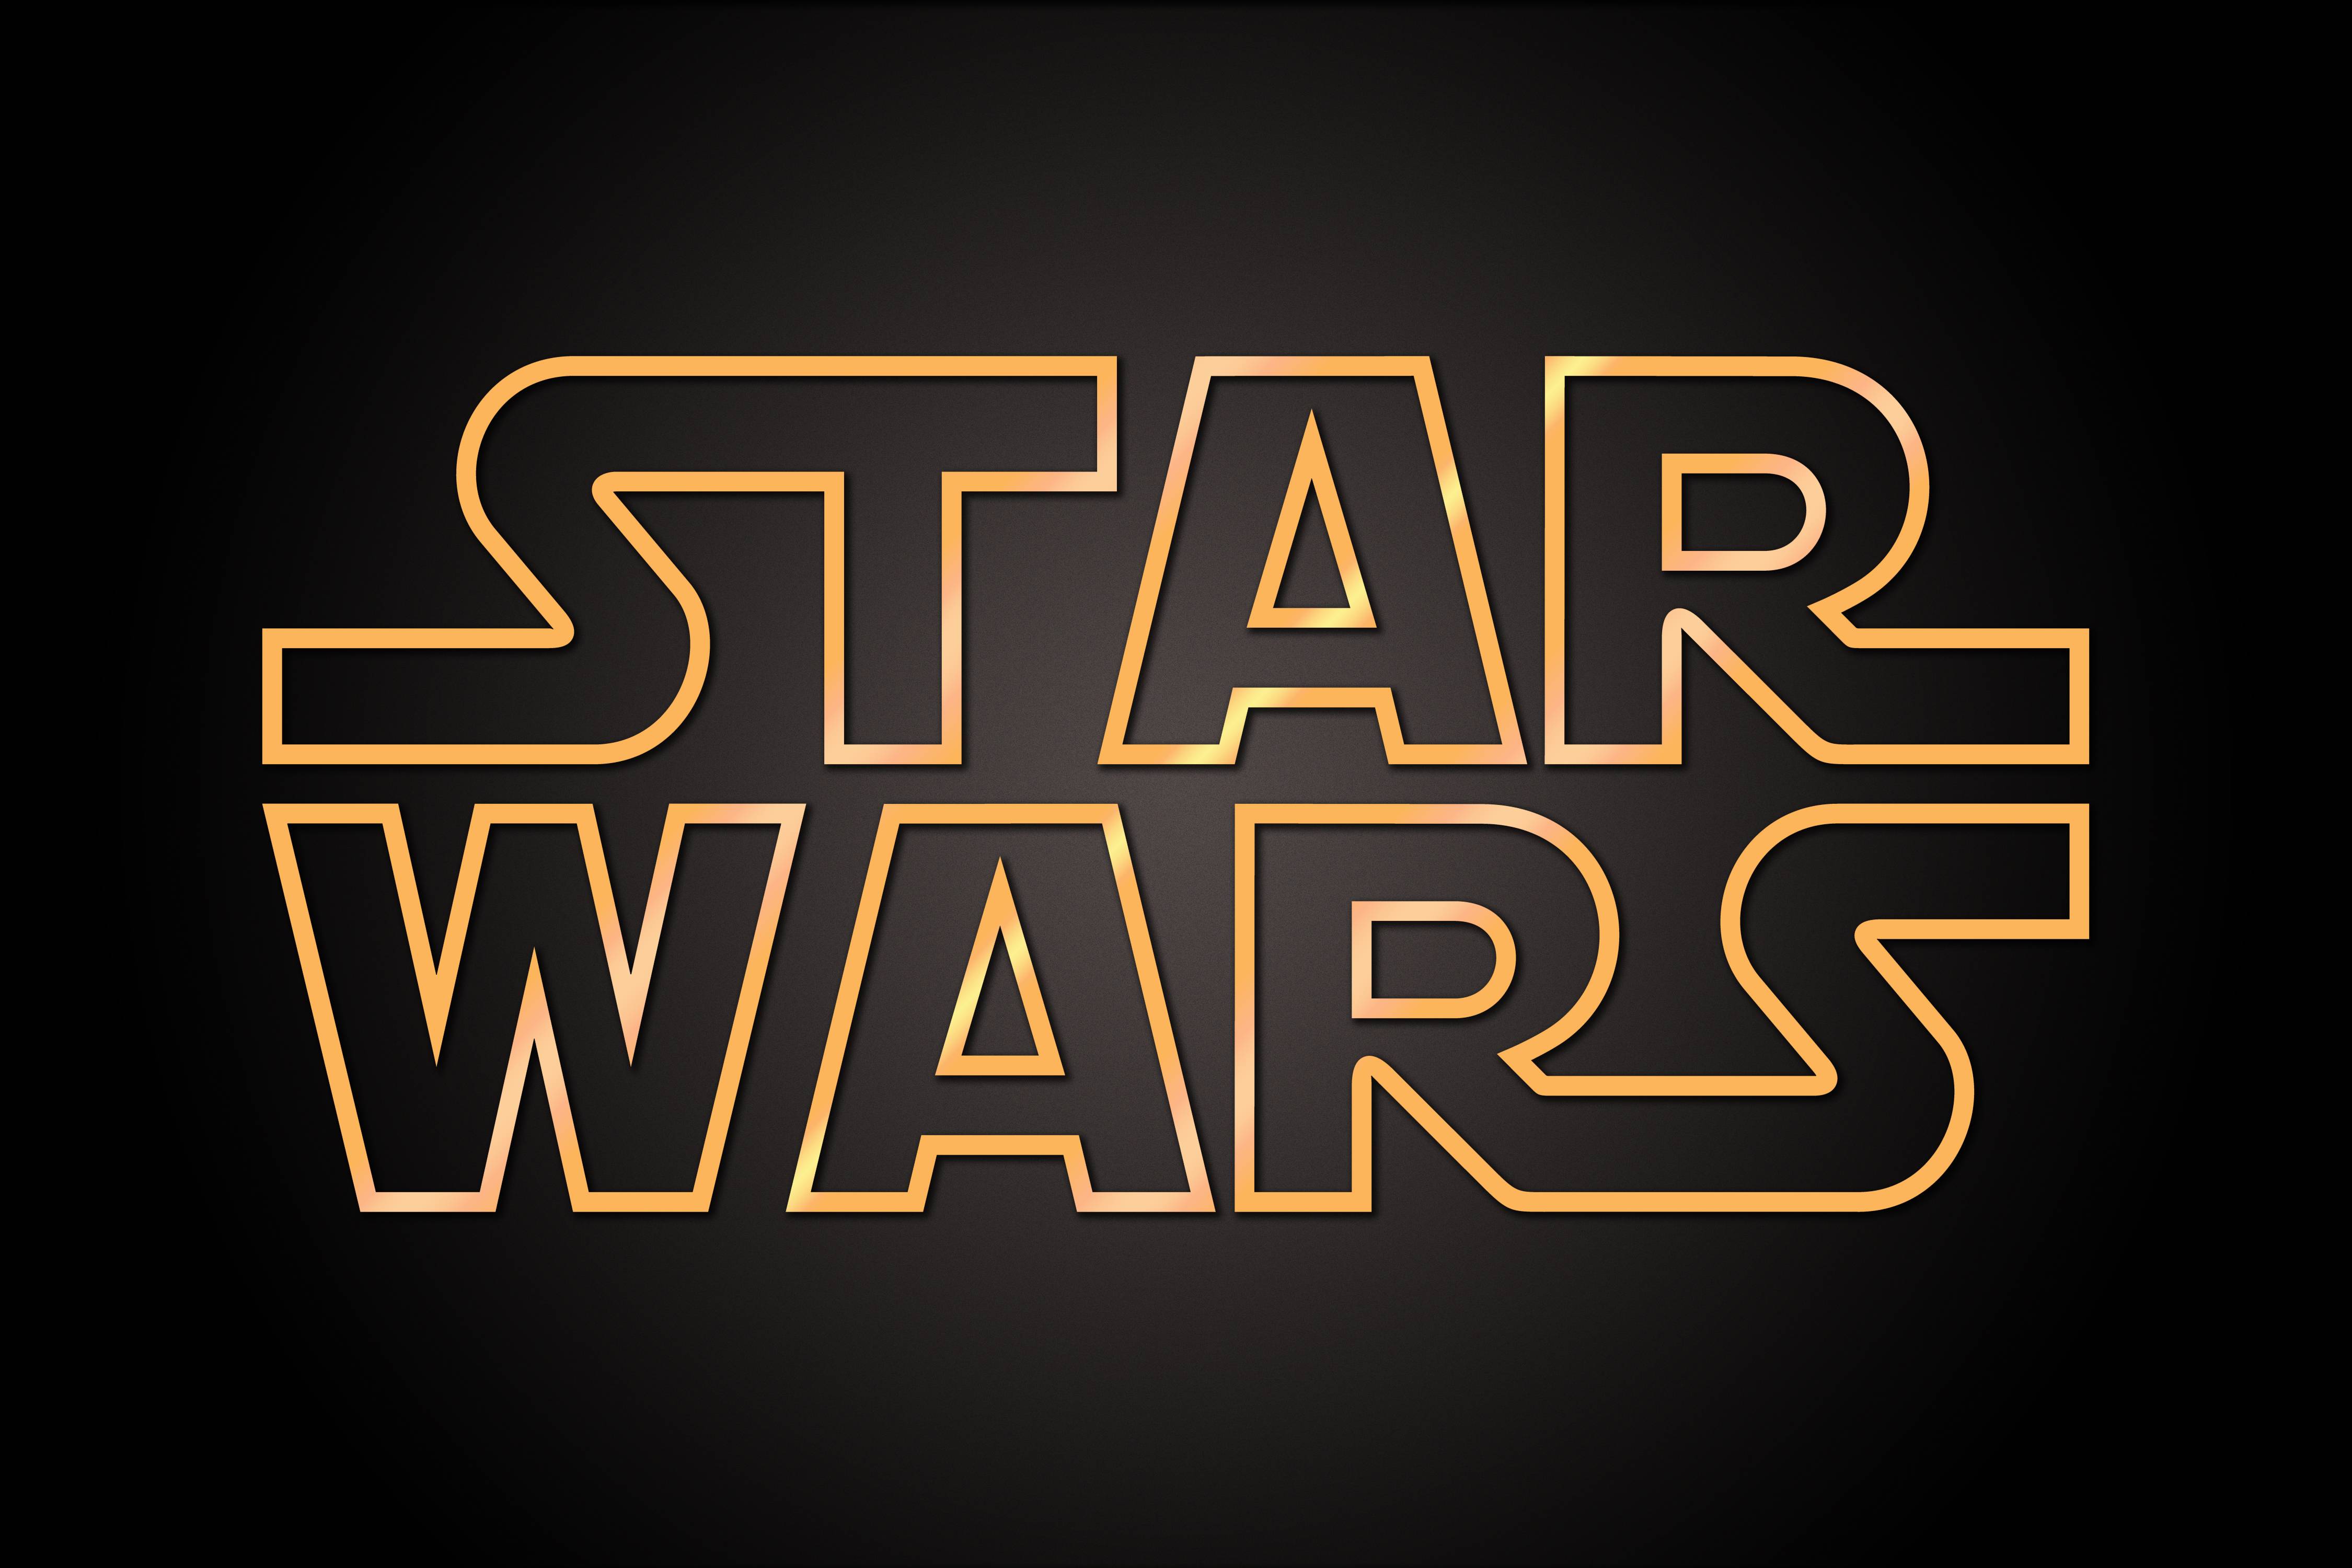 Wallpaper Star Wars Logo Wallpapers